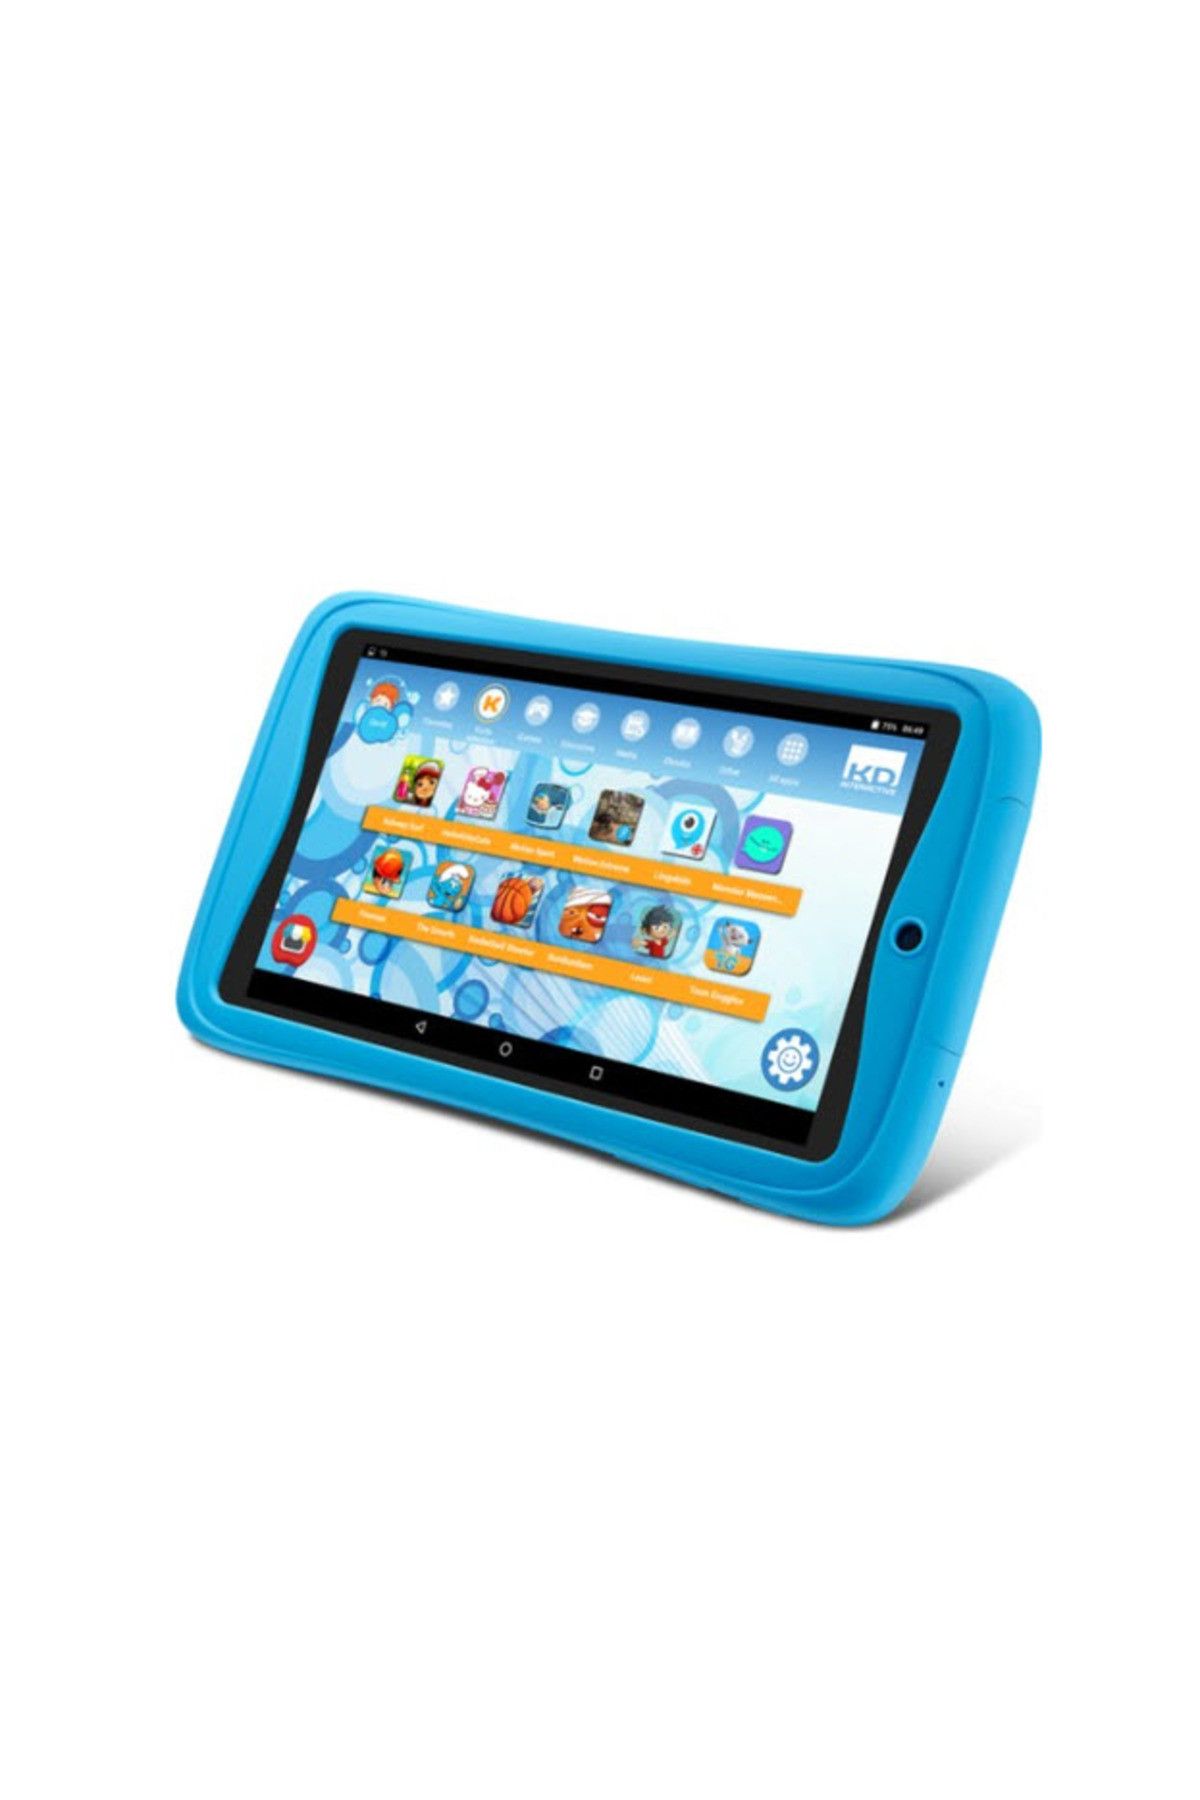 Alcatel A3 8Gb 7" Tablet